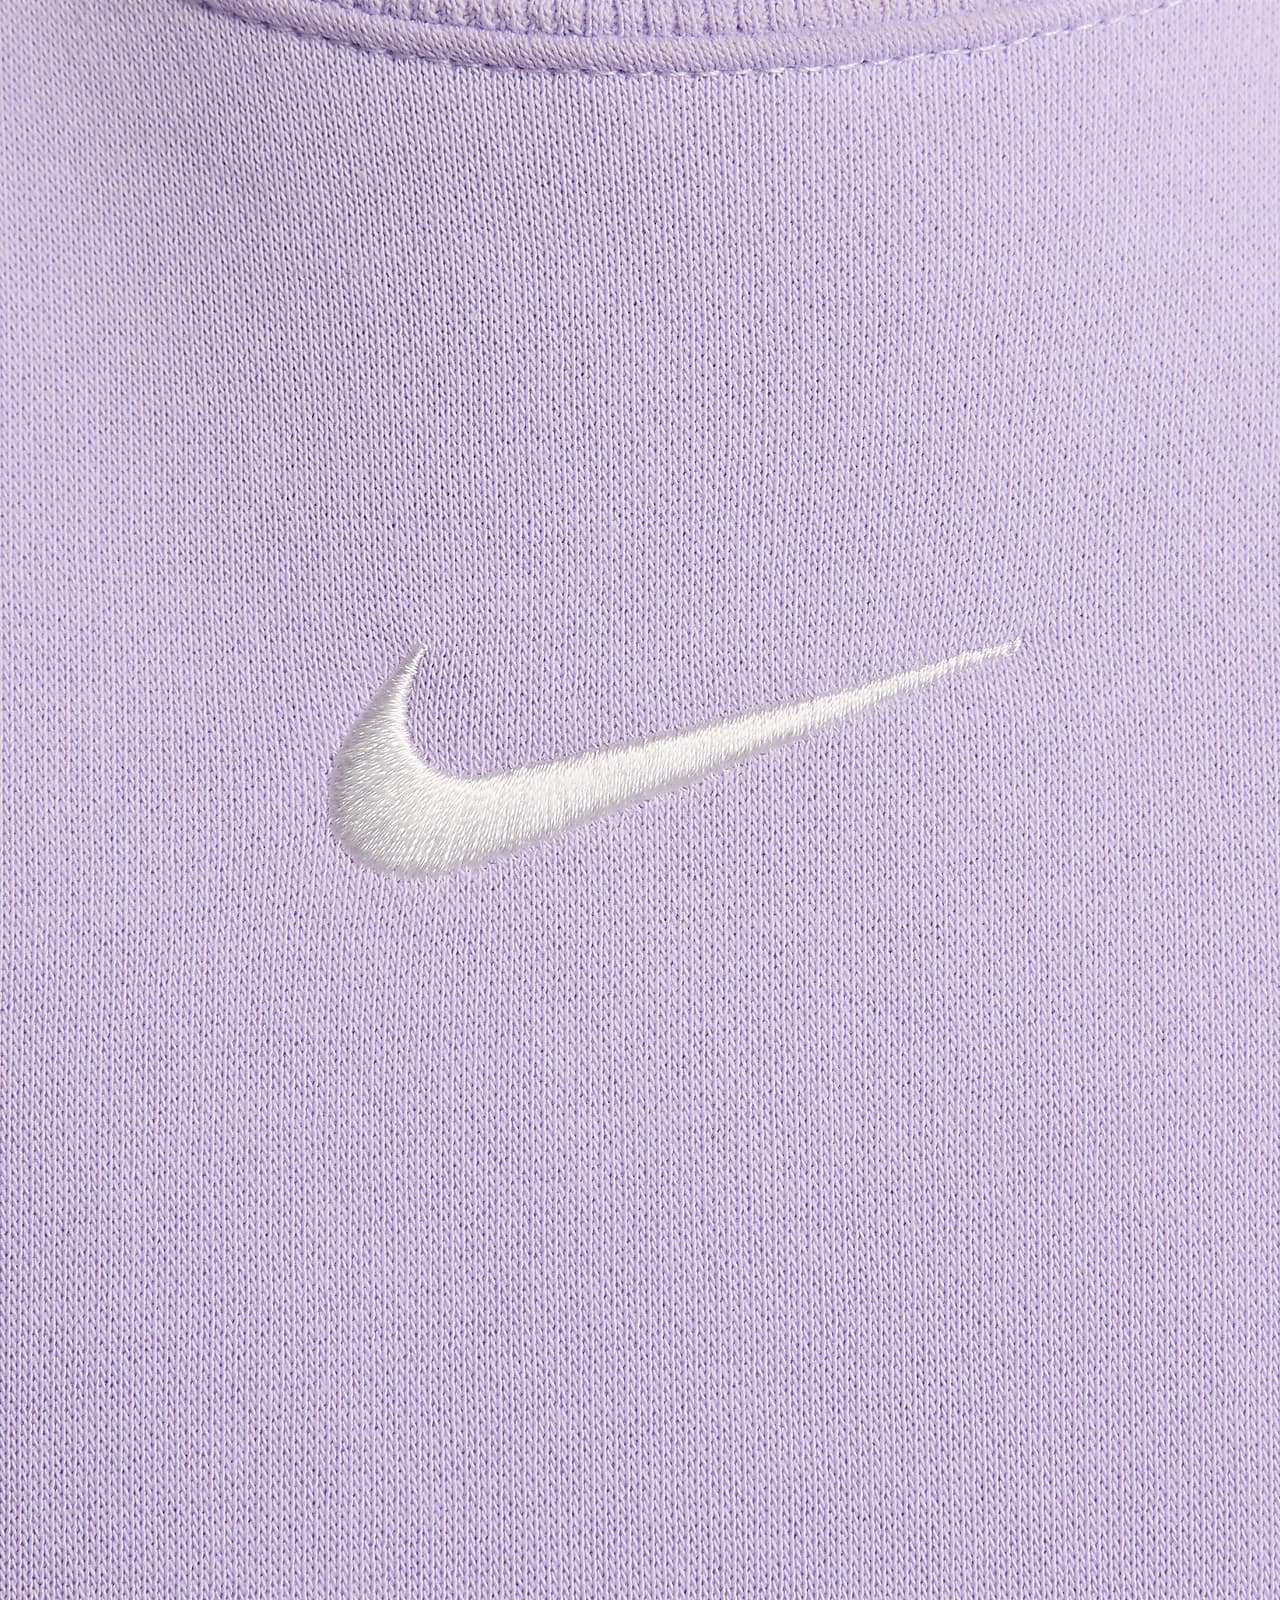 Nike Sportswear Phoenix Fleece Women's Over-Oversized Crew-Neck Graphic  Sweatshirt